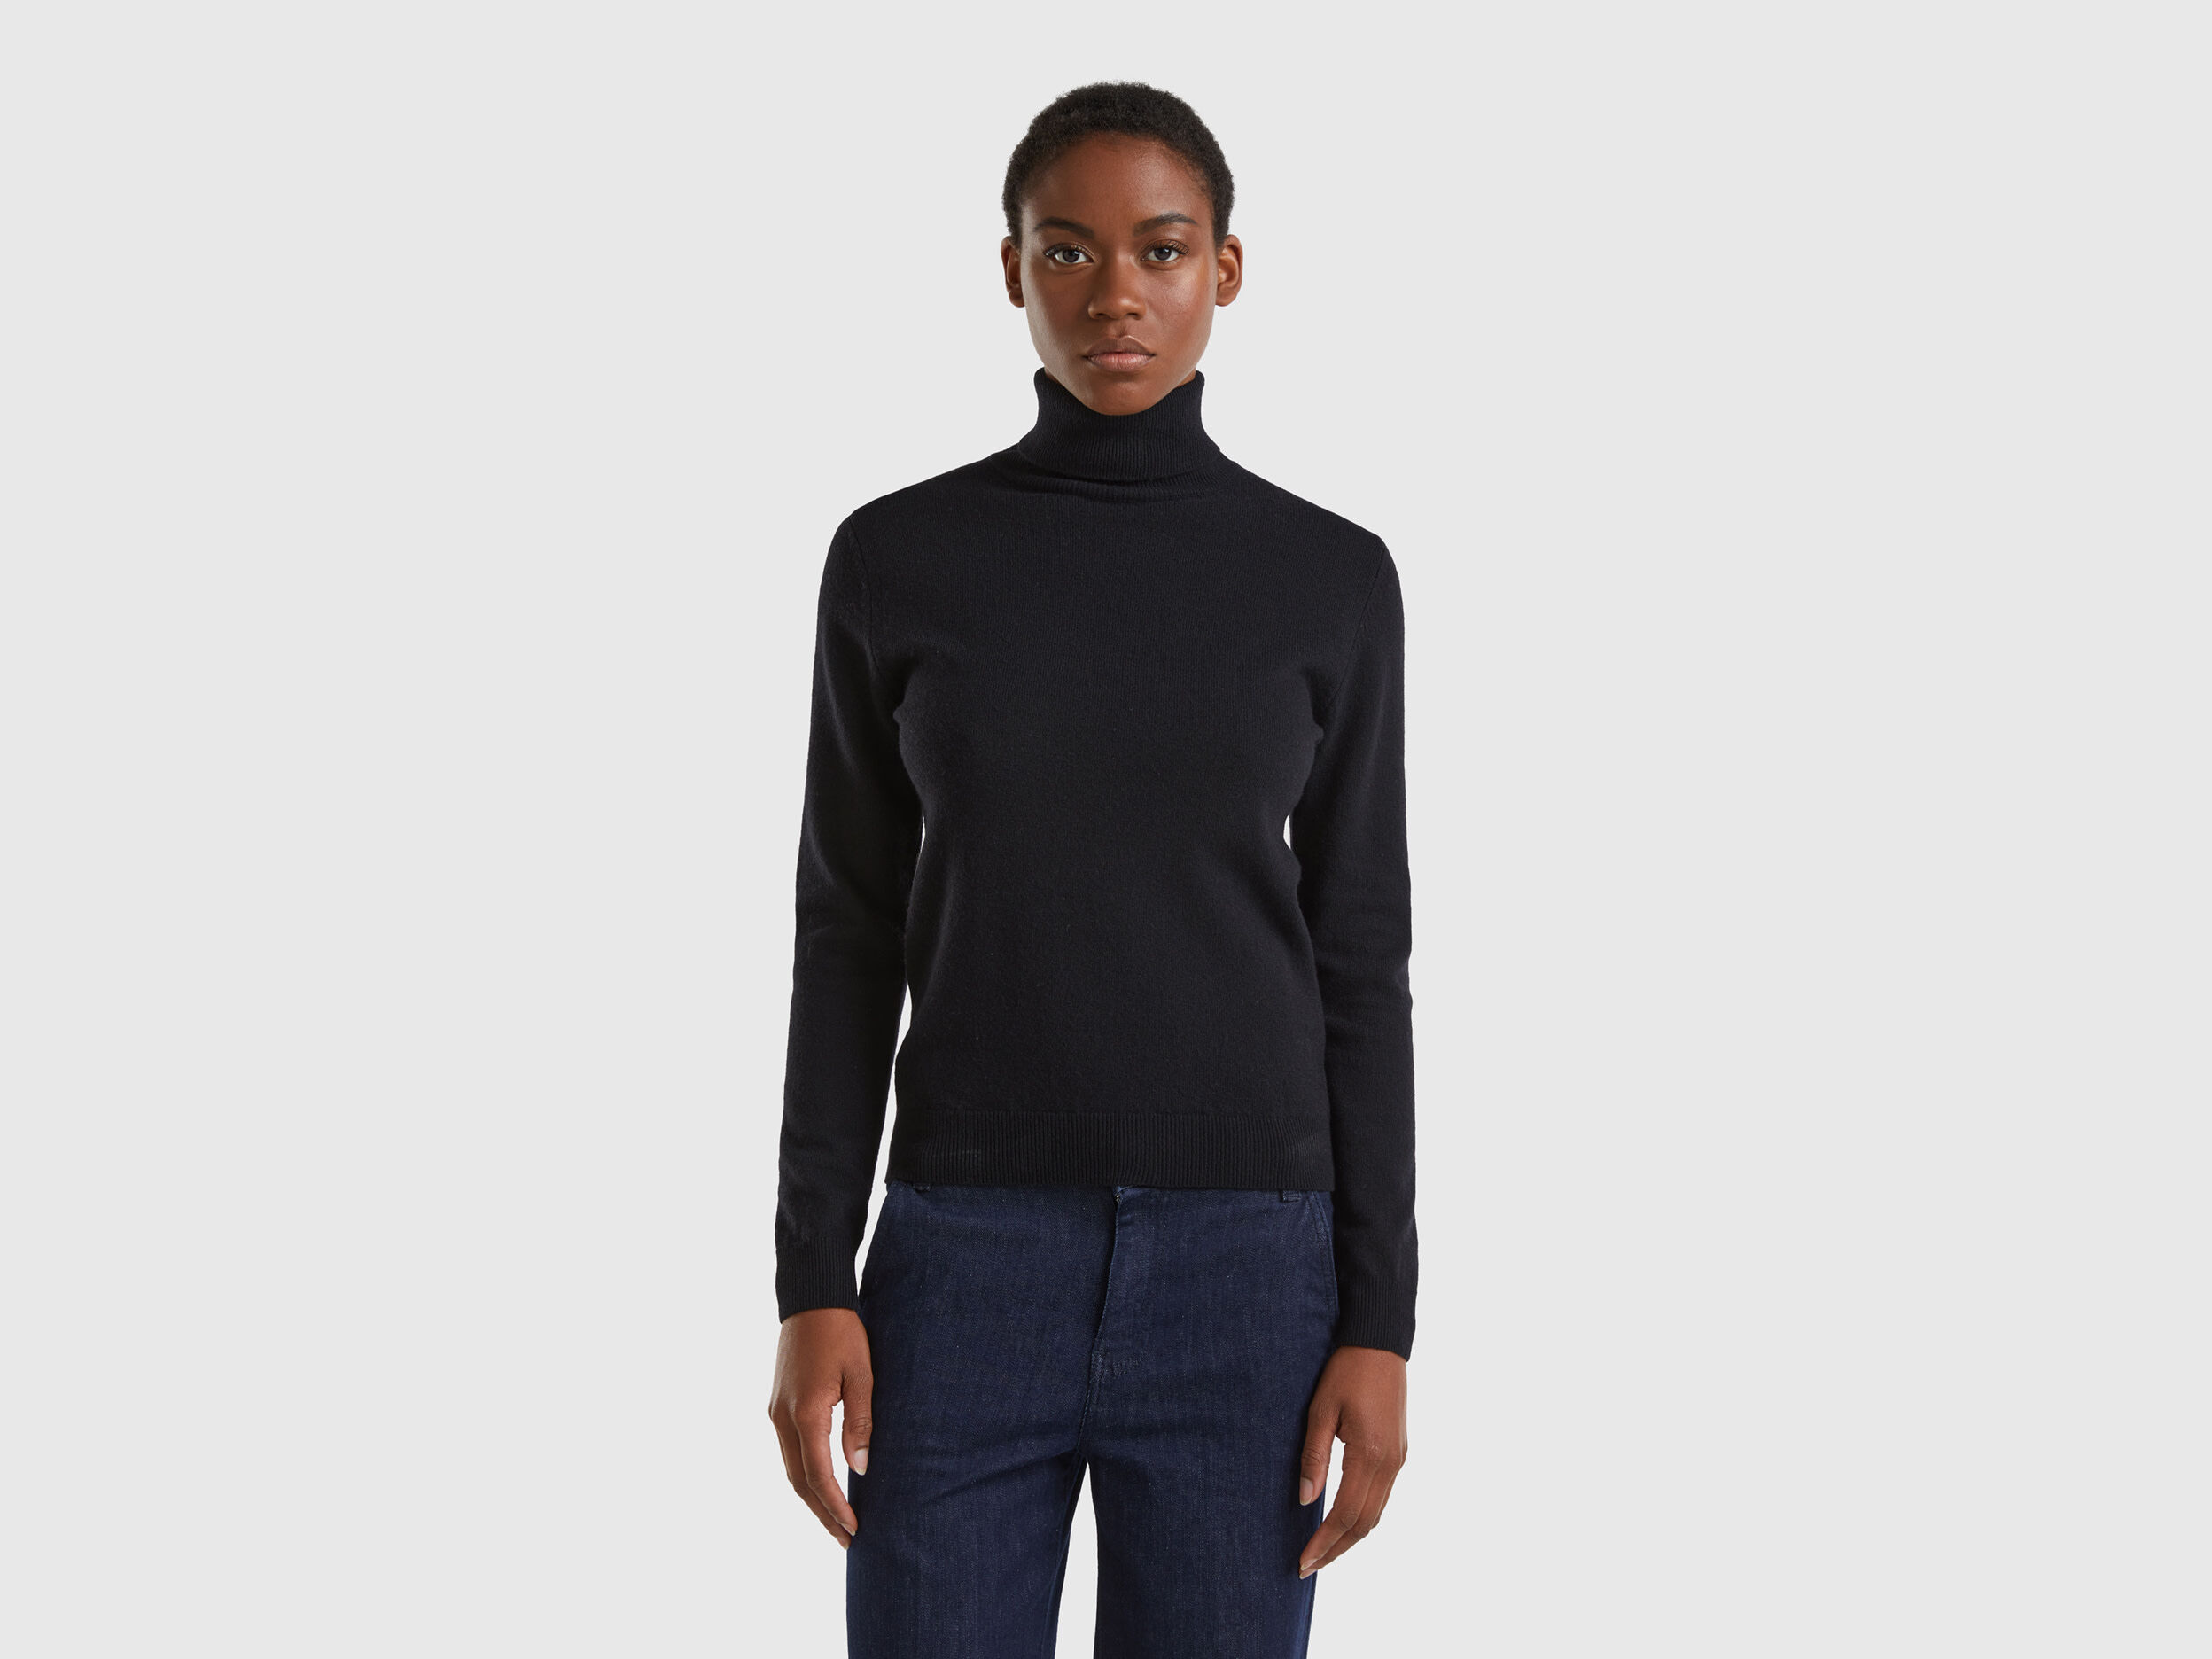 Black turtleneck sweater in pure Merino wool